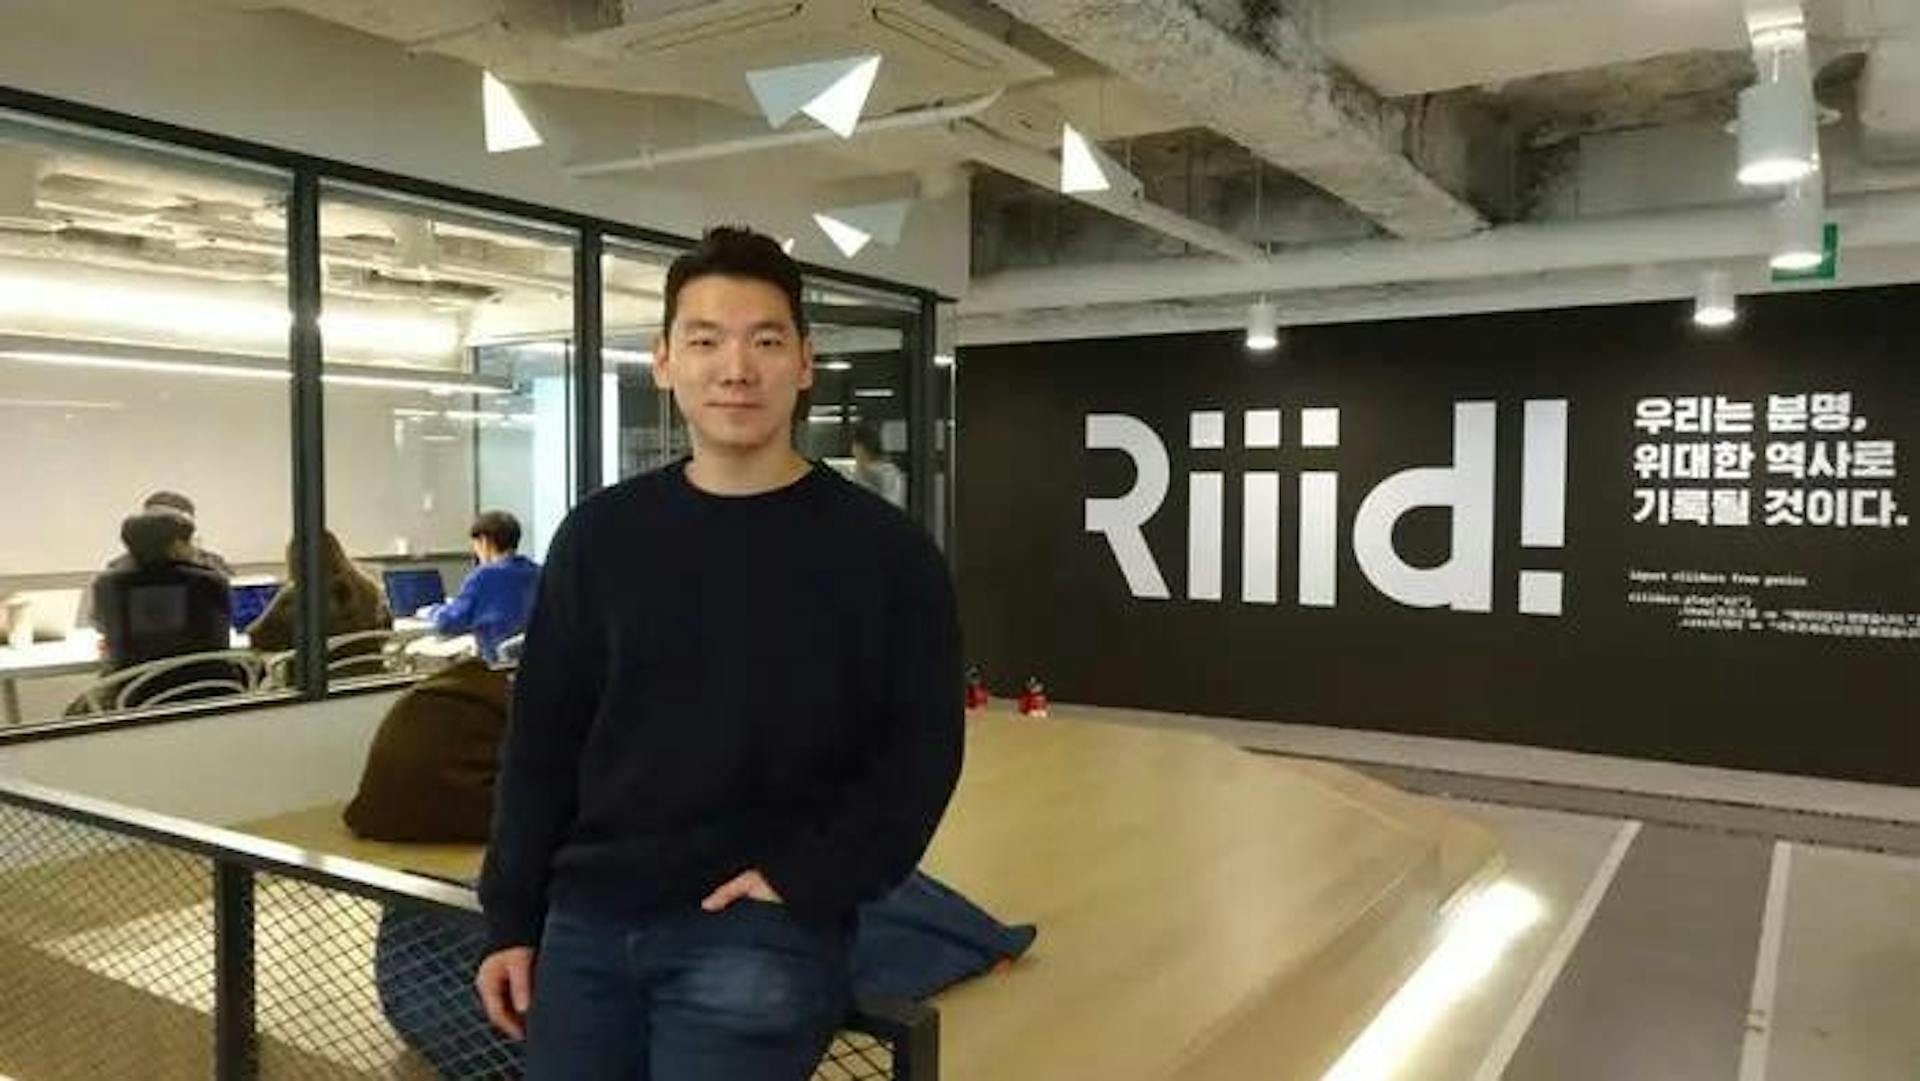 YJ Jang, CEO of education company Riiid